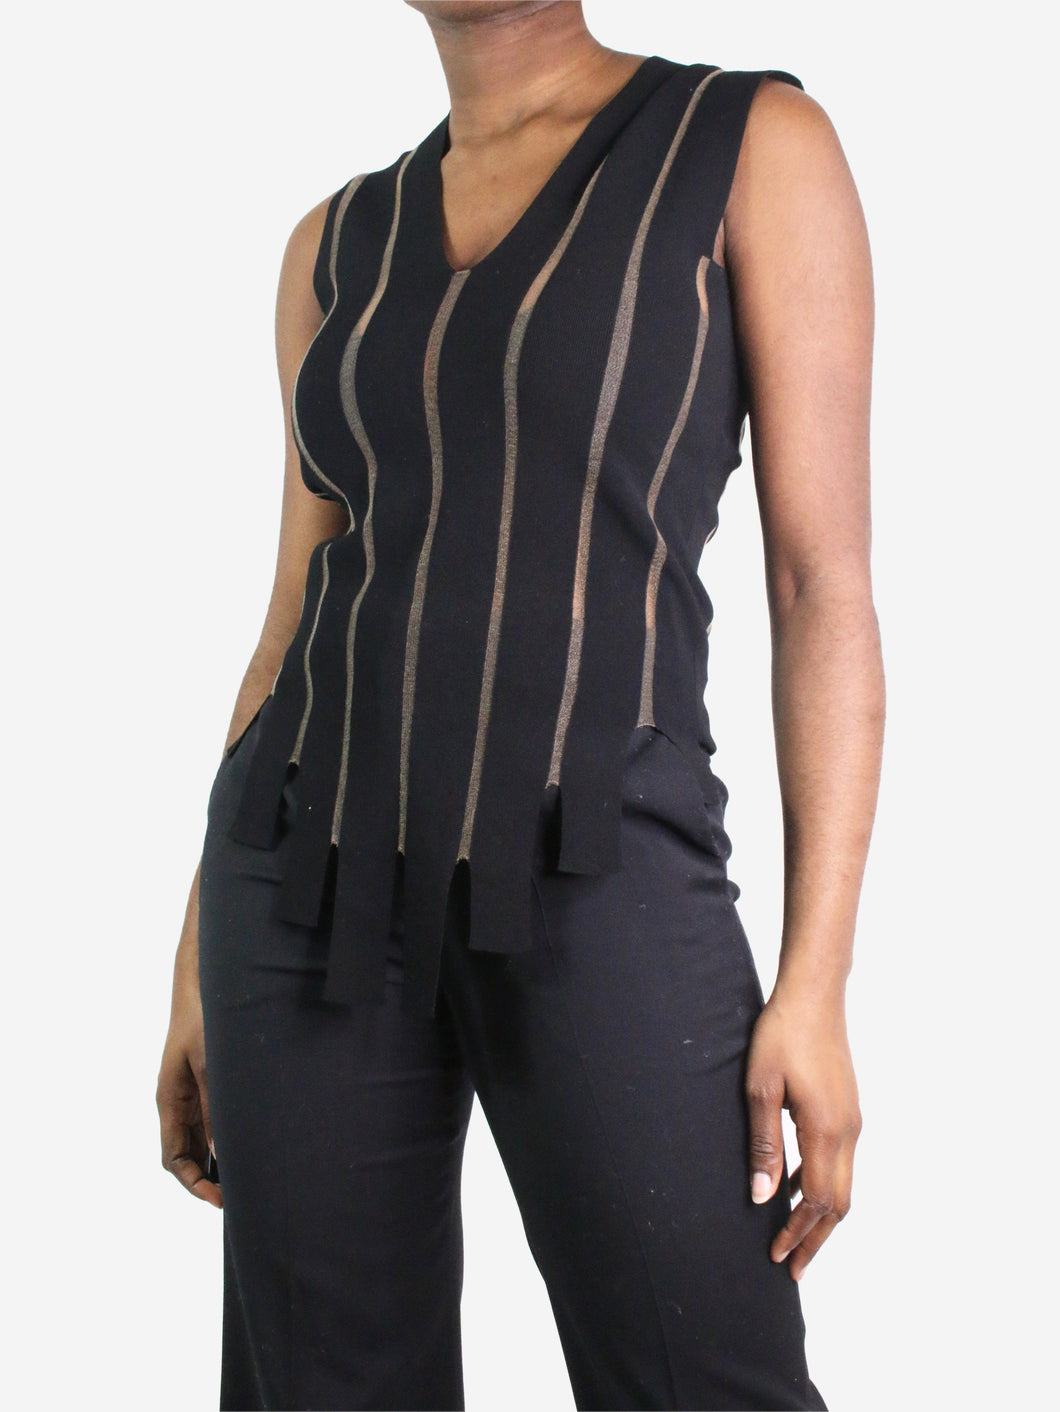 Black sleeveless striped top - size S Tops Alexander McQueen 